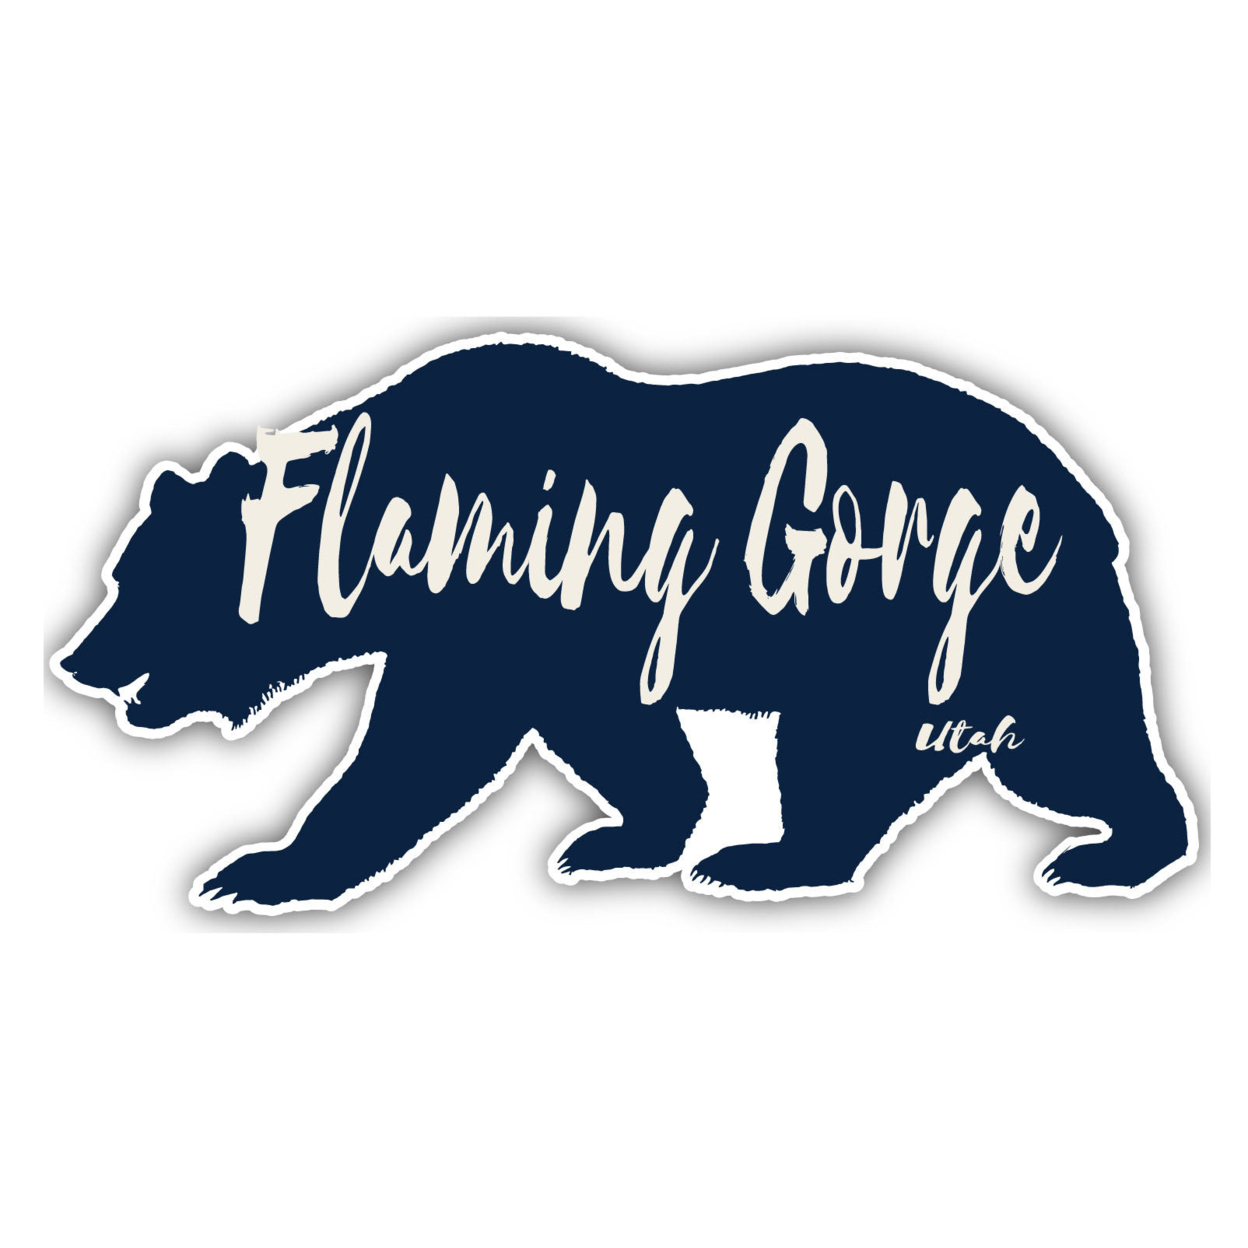 Flaming Gorge Utah Souvenir Decorative Stickers (Choose Theme And Size) - Single Unit, 8-Inch, Bear